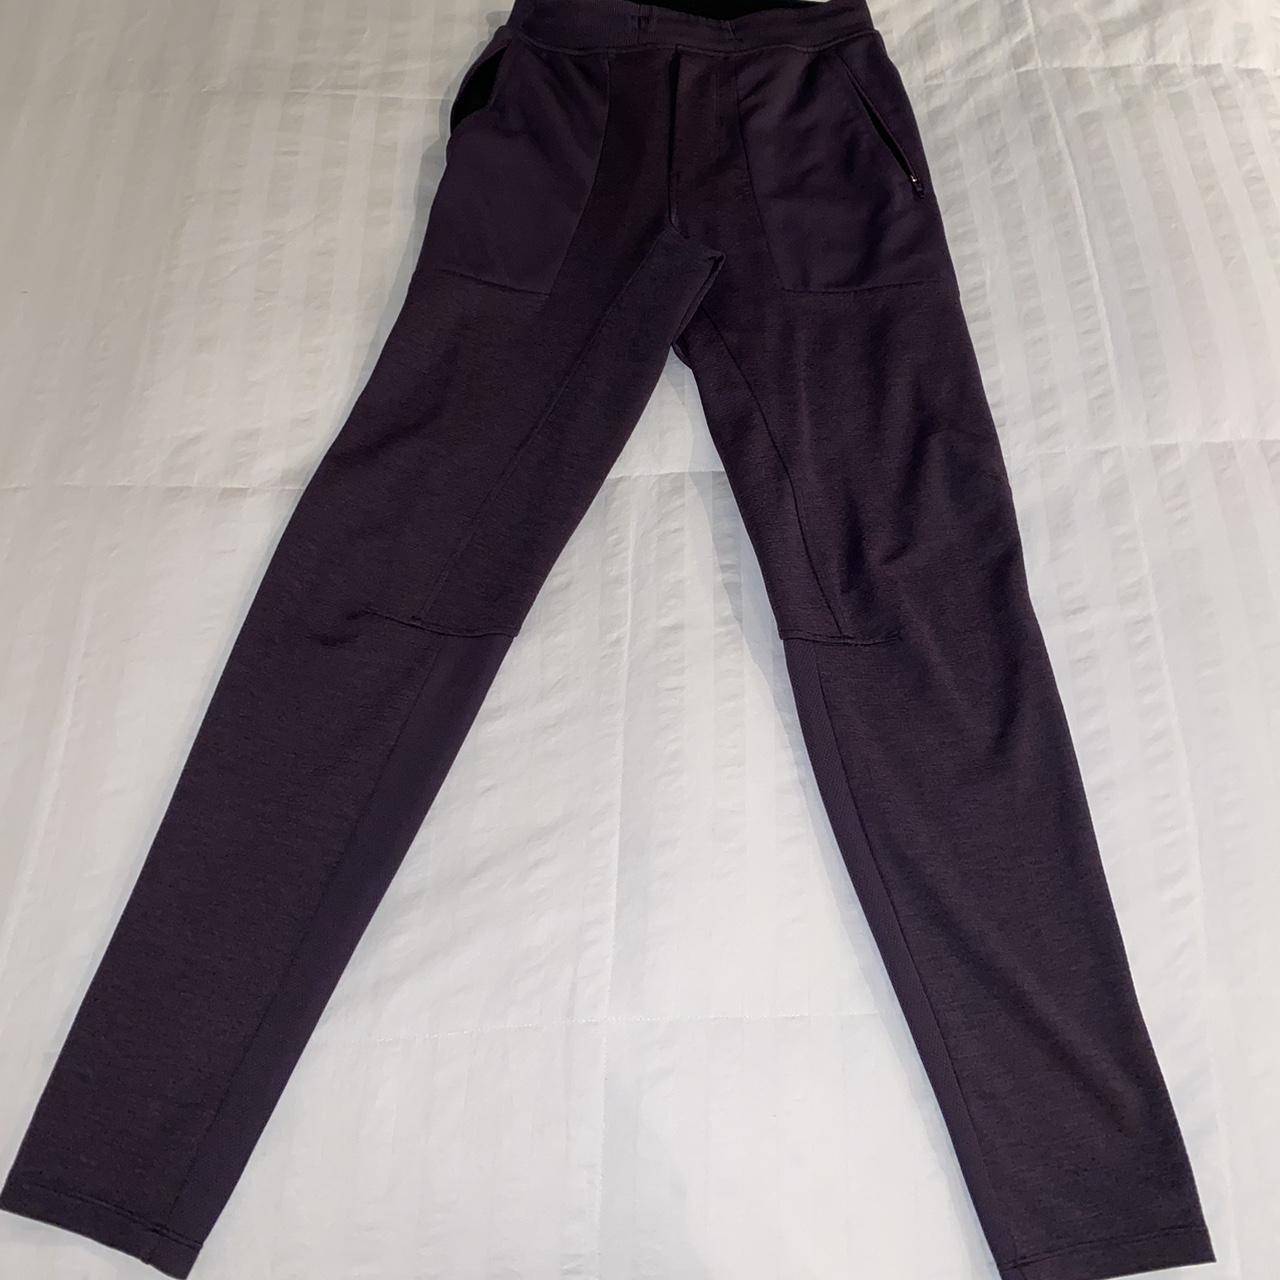 gray/purple/blue lululemon capri sweatpants, dance - Depop